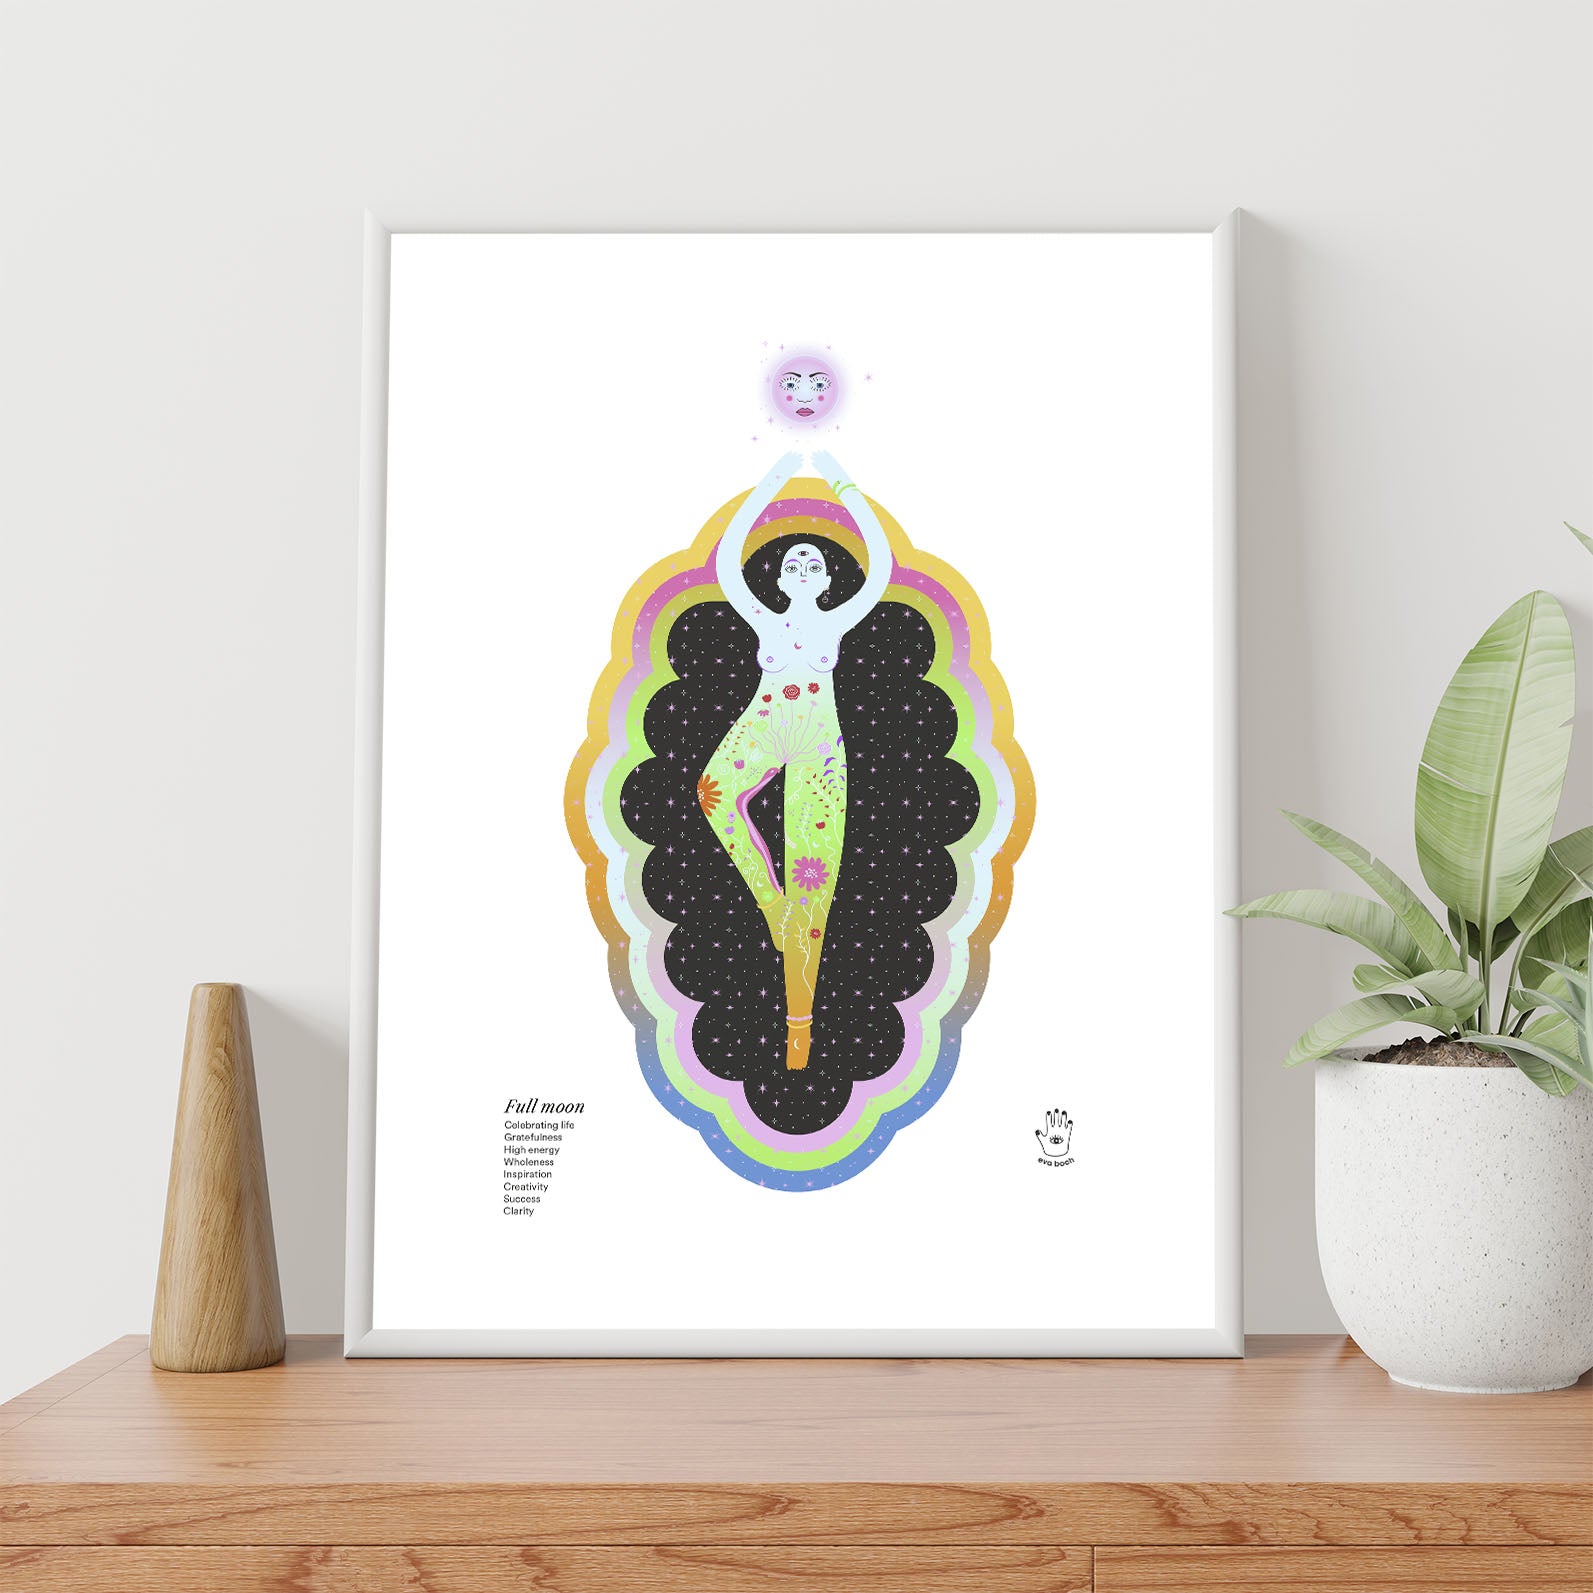 Lunar & Menstrual Cycle, Wall Art Print, Poster, Illustration – Eva Boch